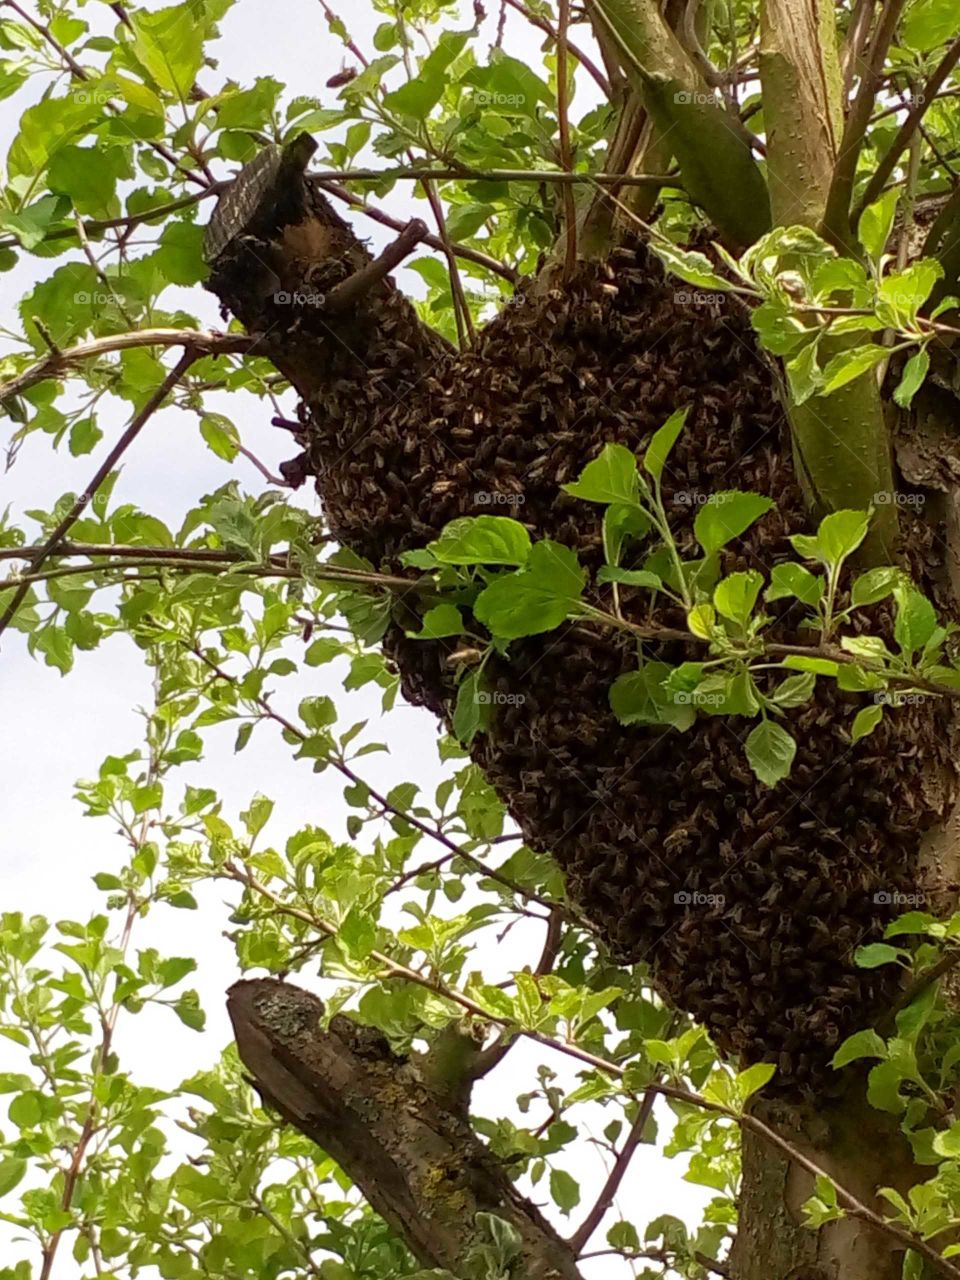 Swarm of bees / Essaim d'abeilles